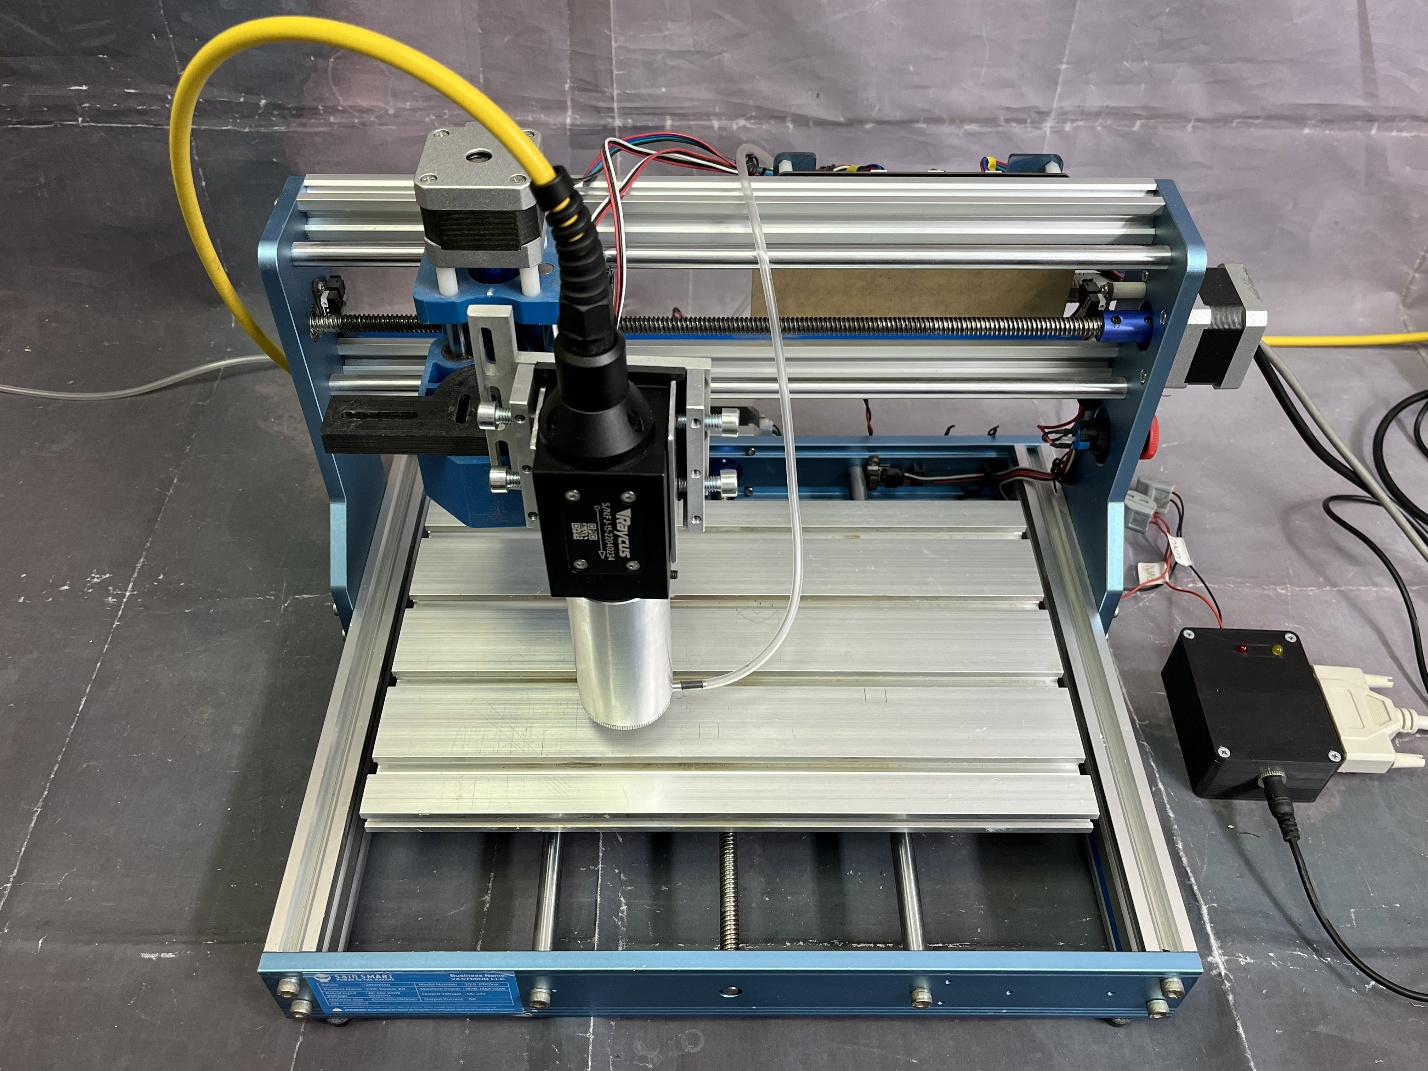 Figure 6 - Fiber laser mounted on a CNC milling machine